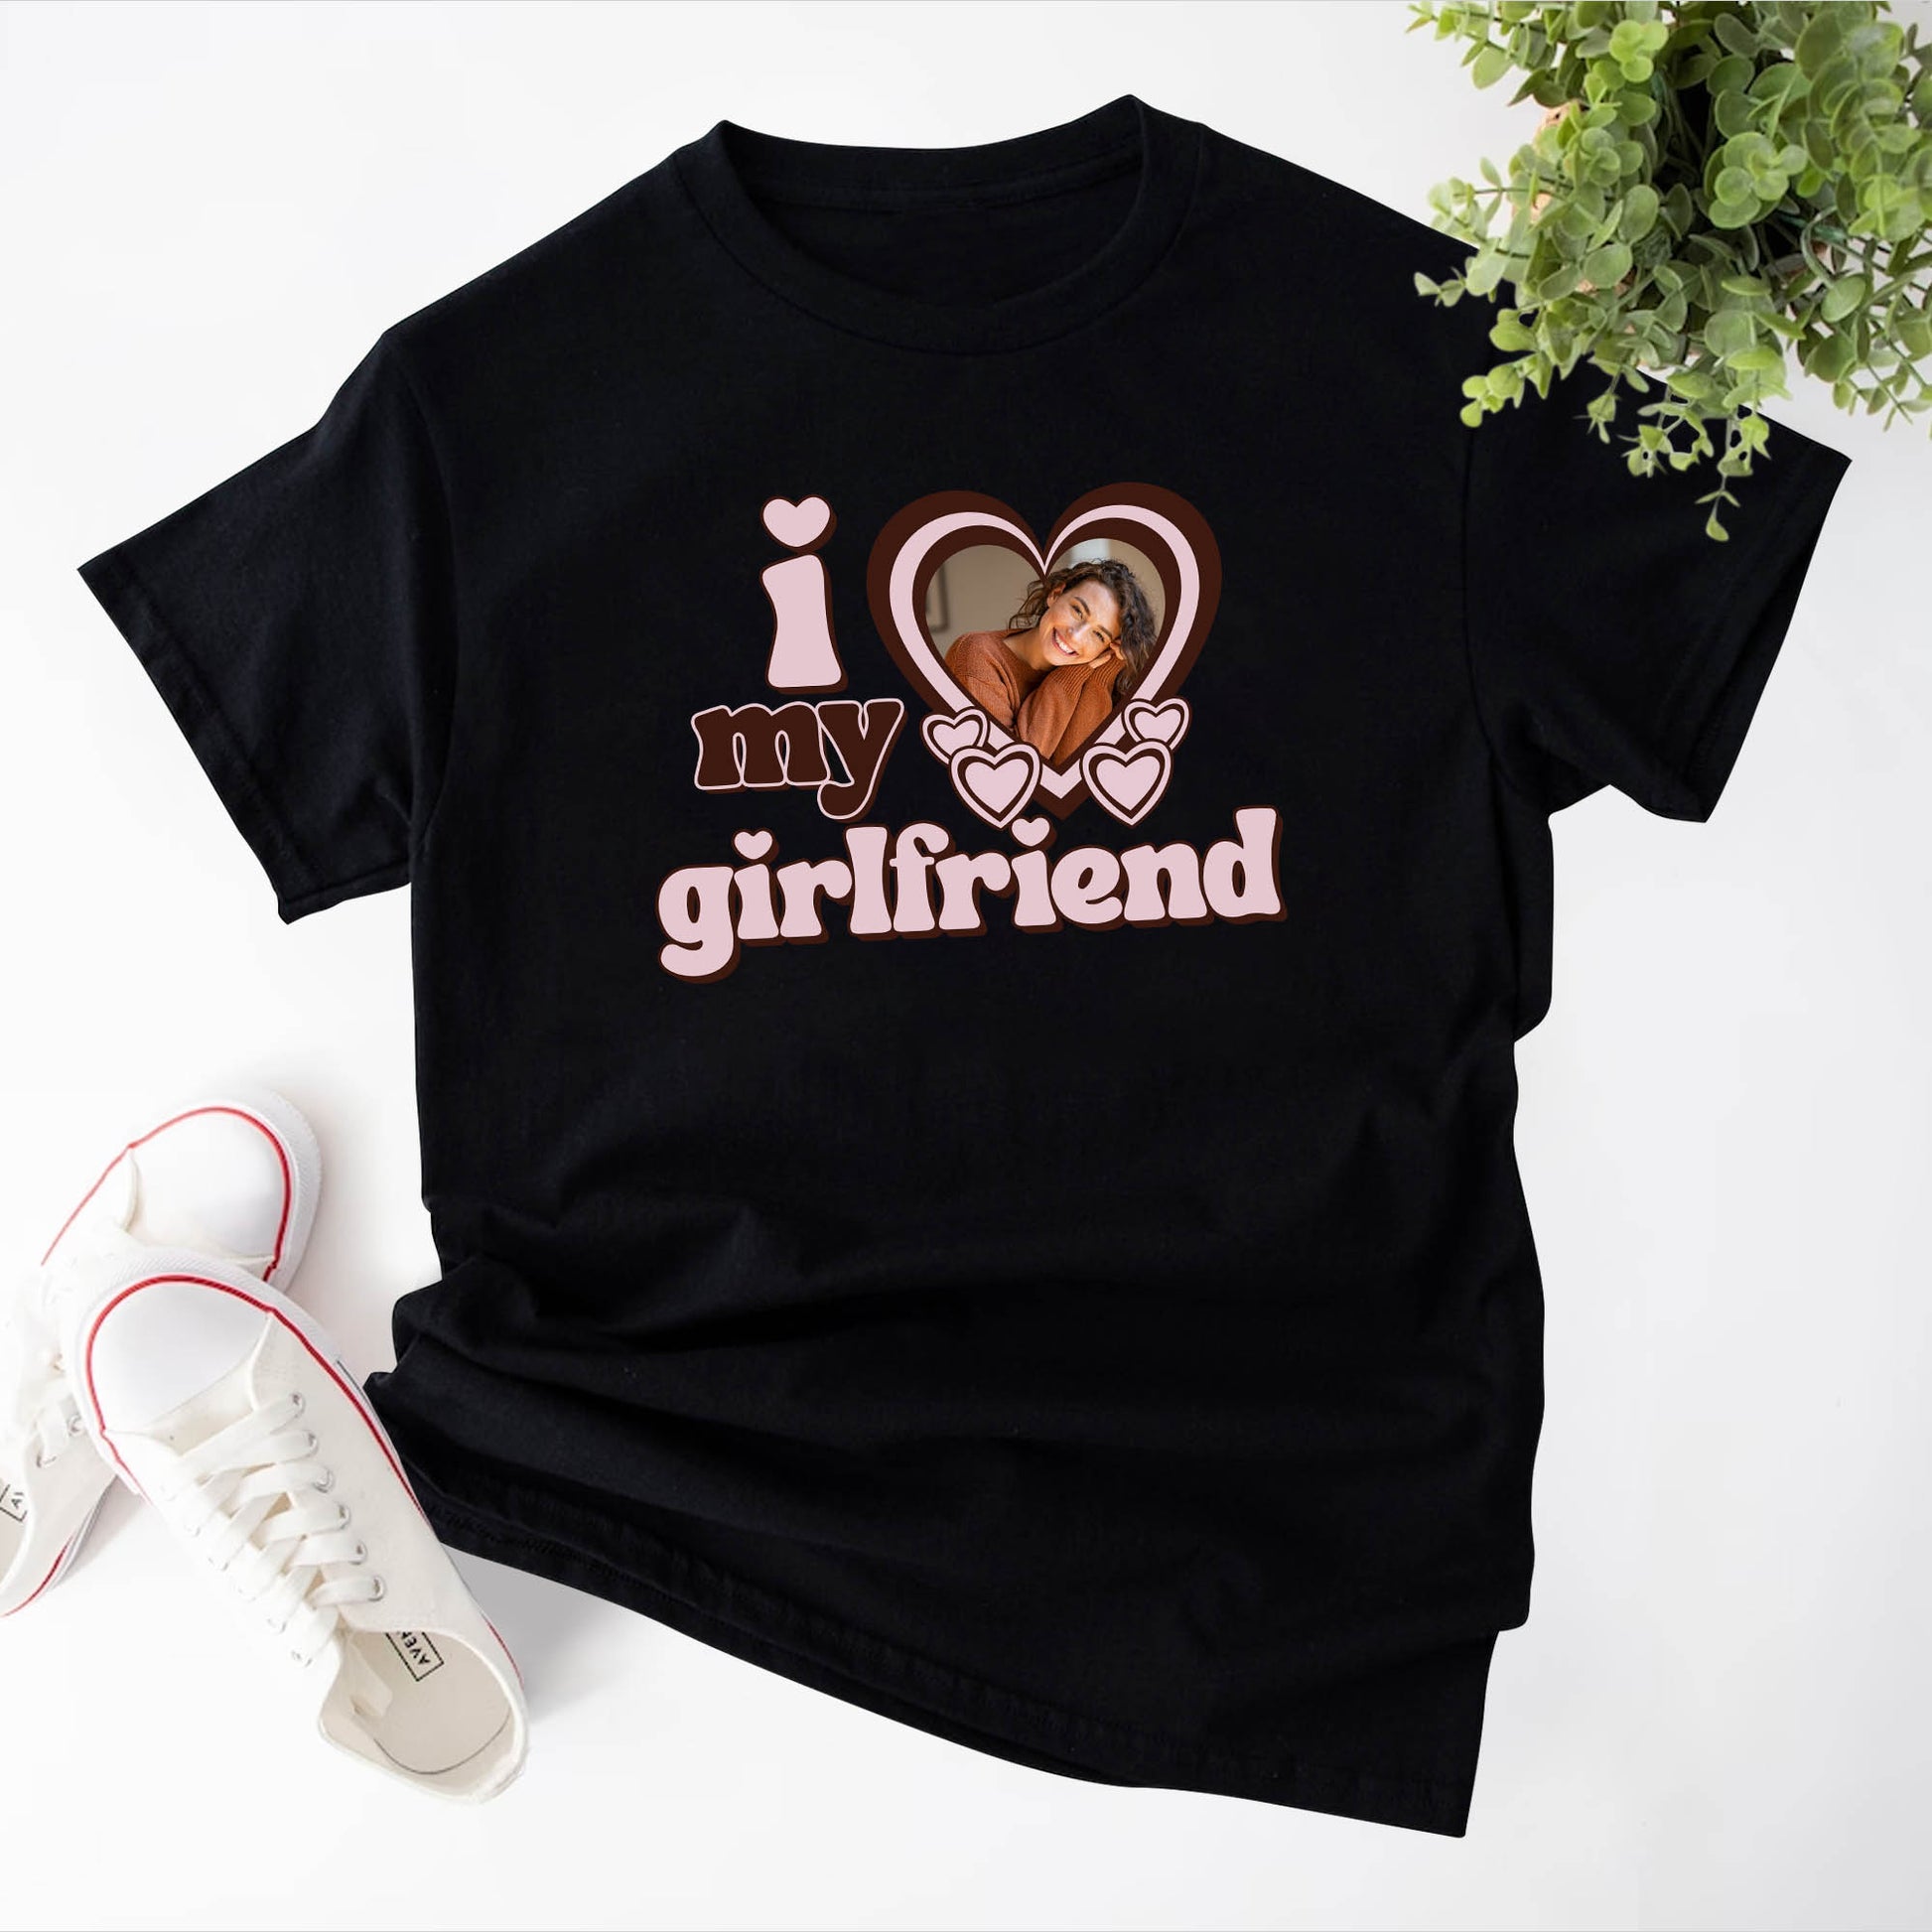 I Love My Girlfriend Shirt, I Love My Gf Shirt, I Heart My Girlfriend Shirt,  I Heart My Gf Shirt, I Love My Girlfriend T Shirt, I Love My Gf T Shirt –